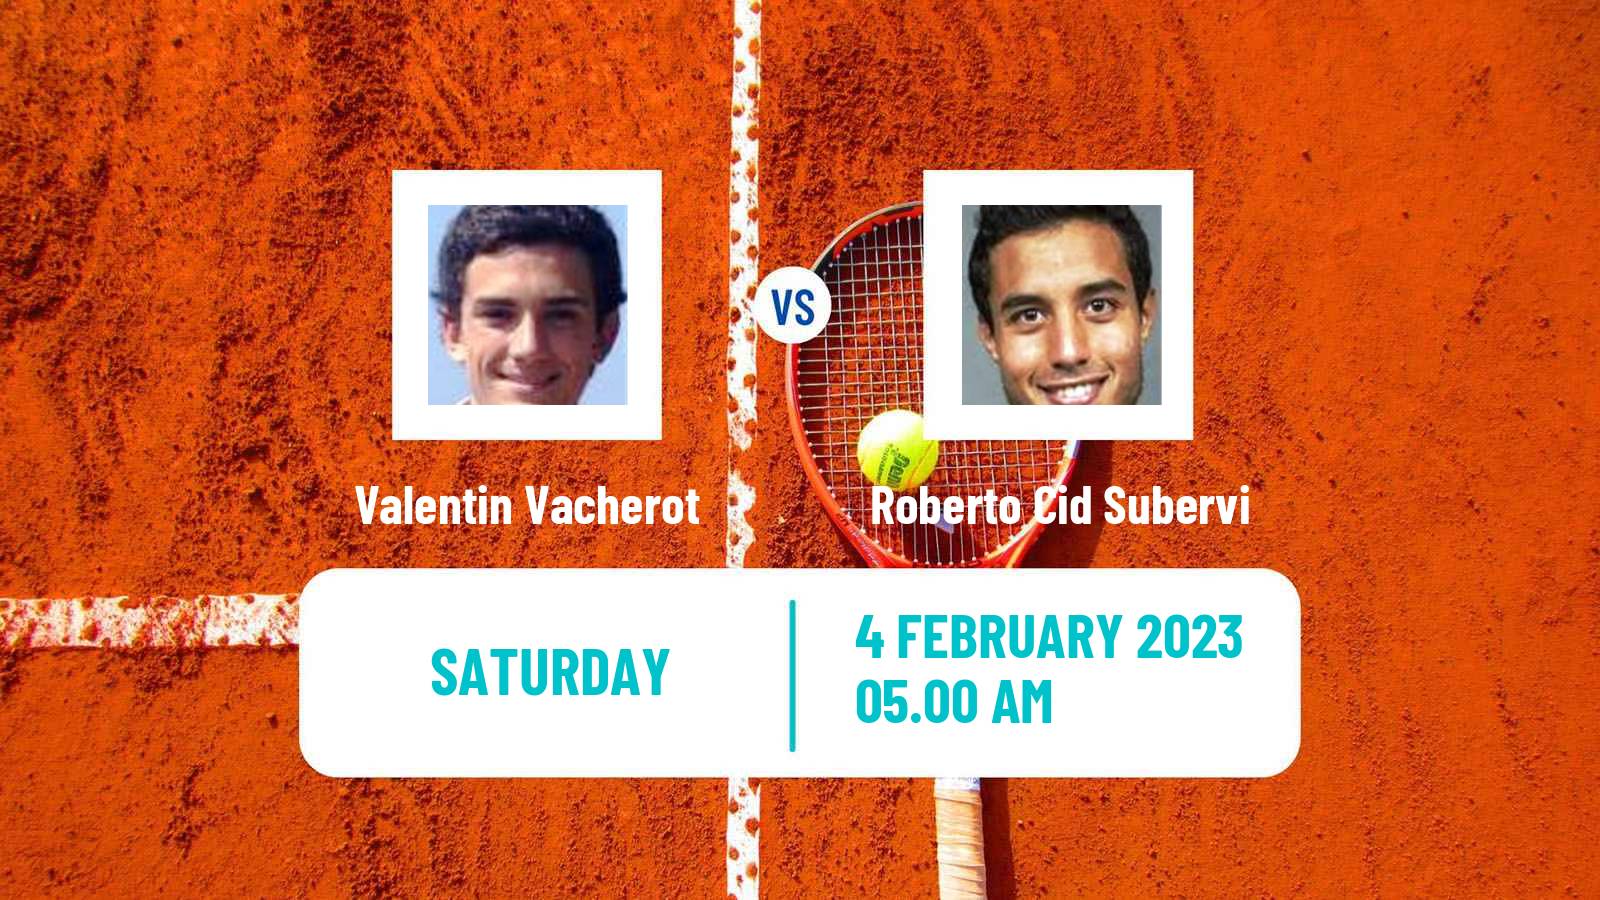 Tennis Davis Cup World Group II Valentin Vacherot - Roberto Cid Subervi